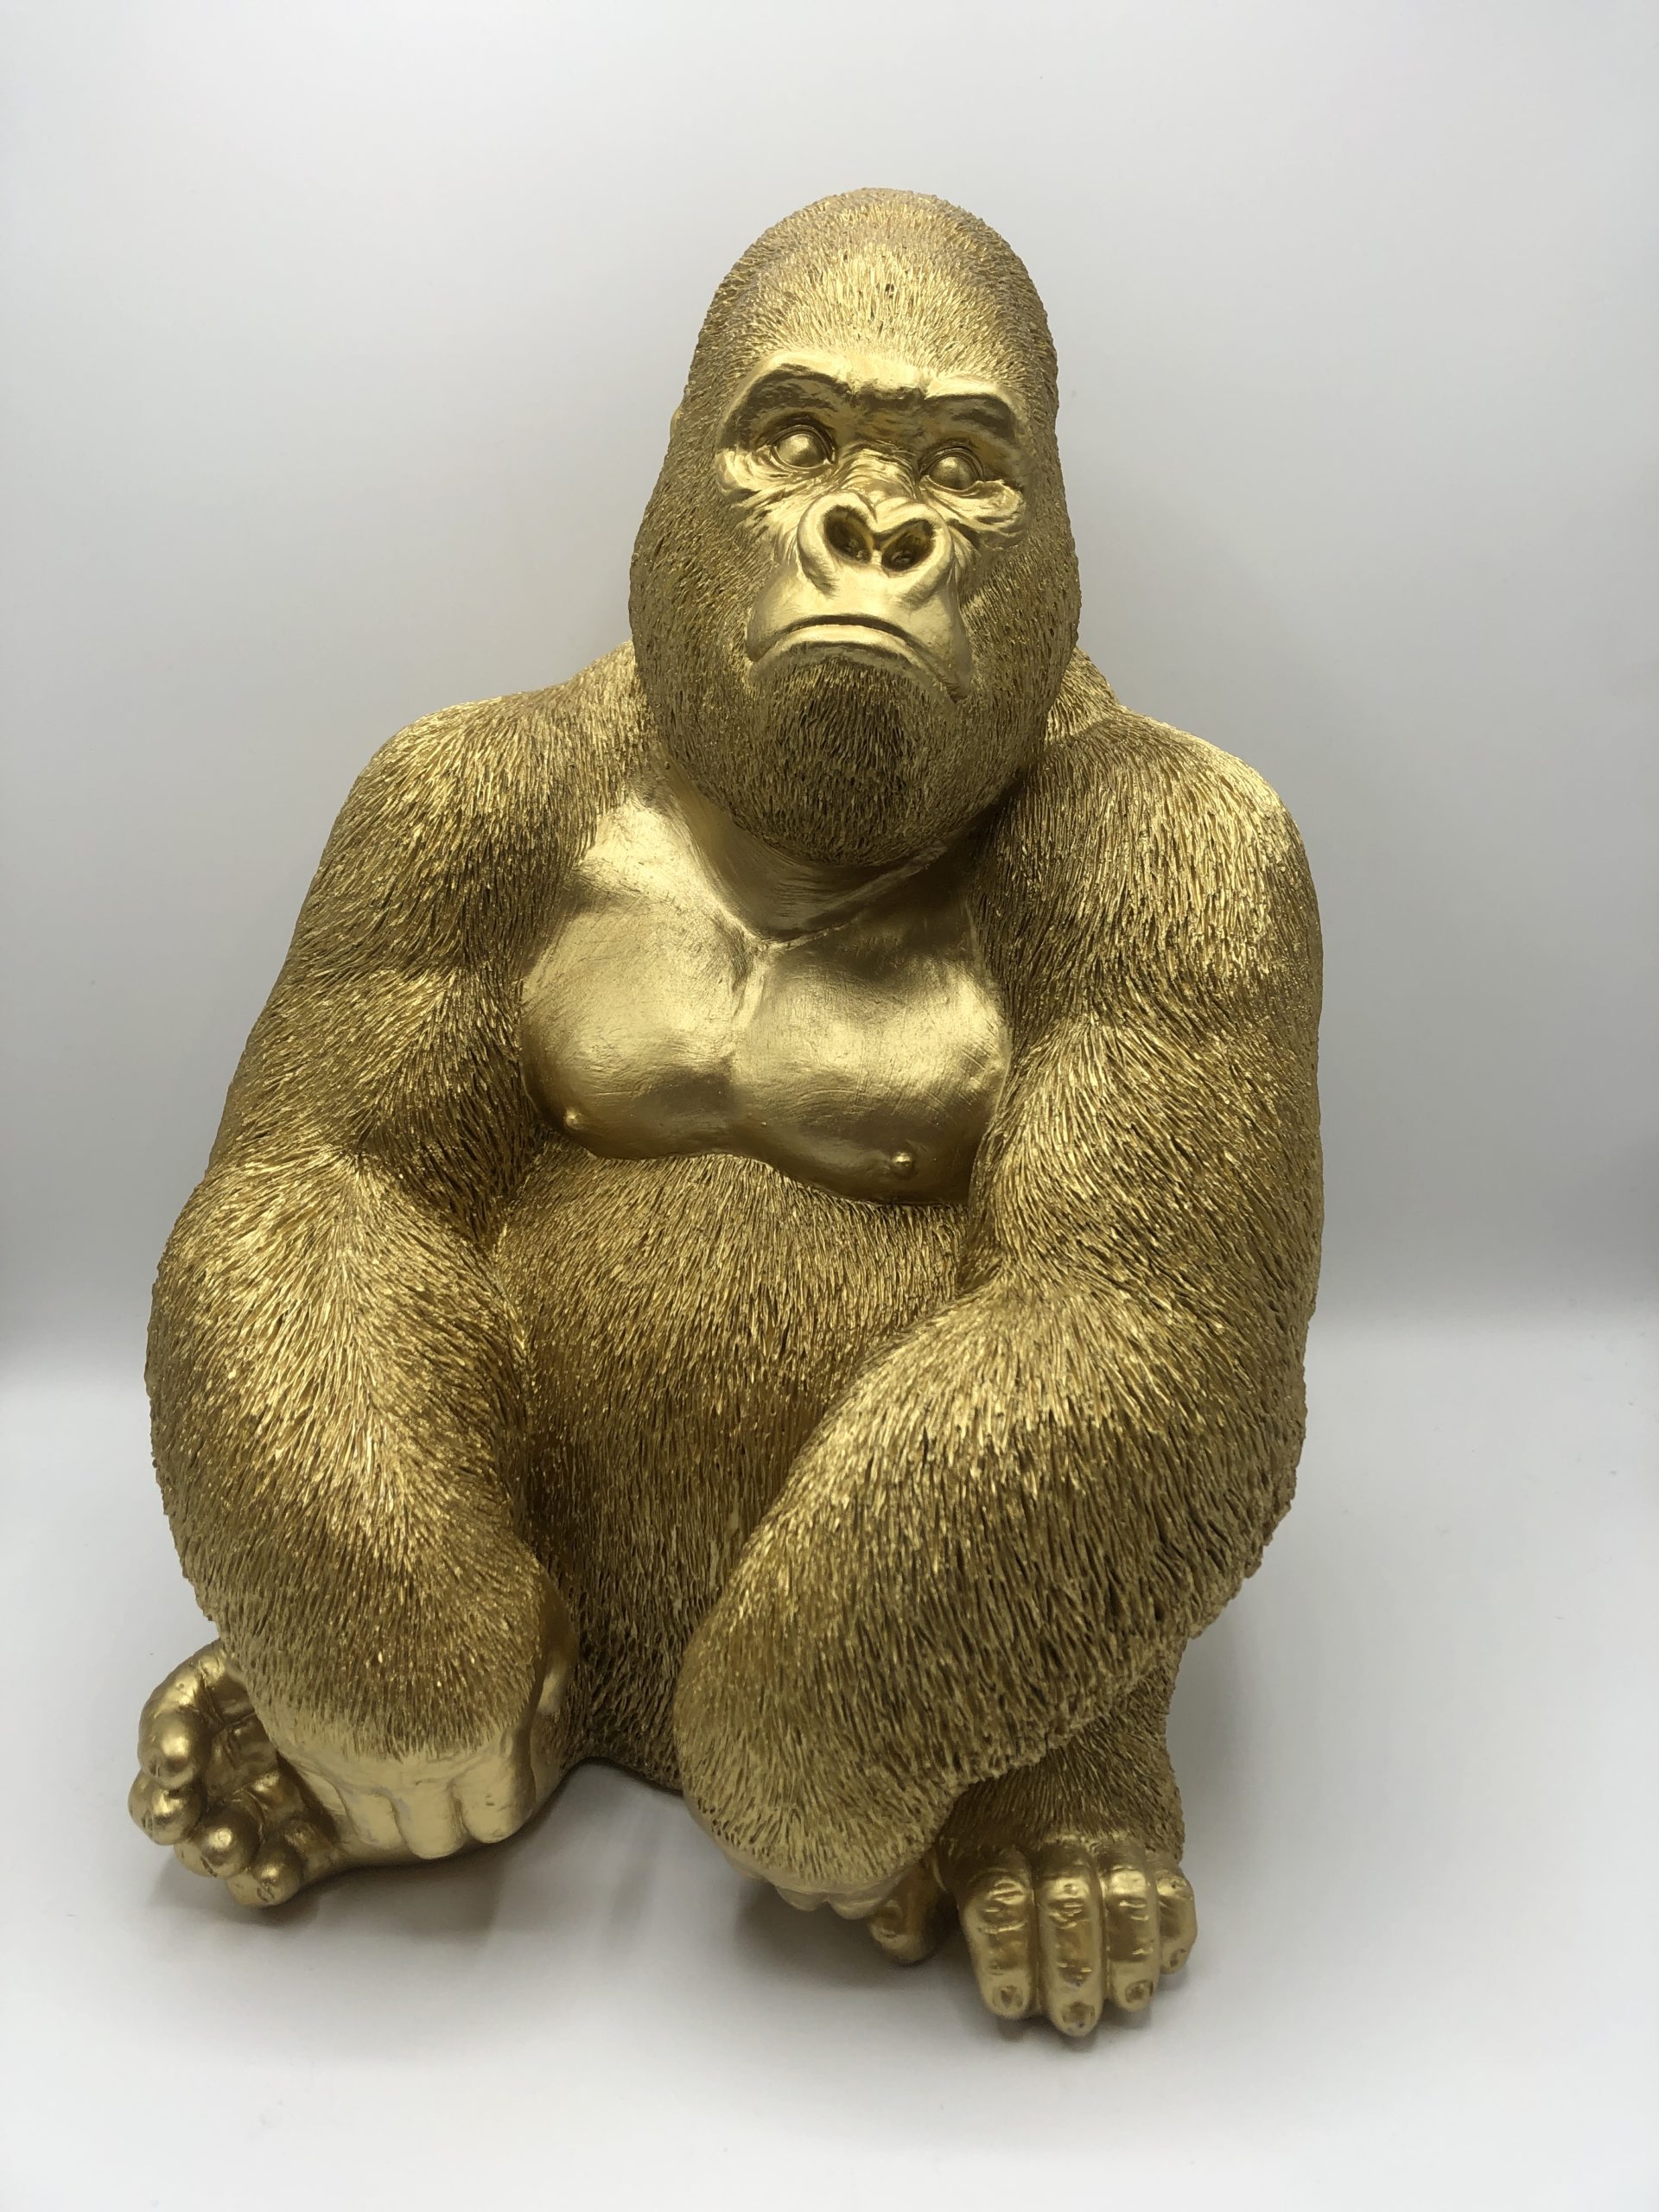 Golden Gorilla – Sports bra – Golden Gorilla